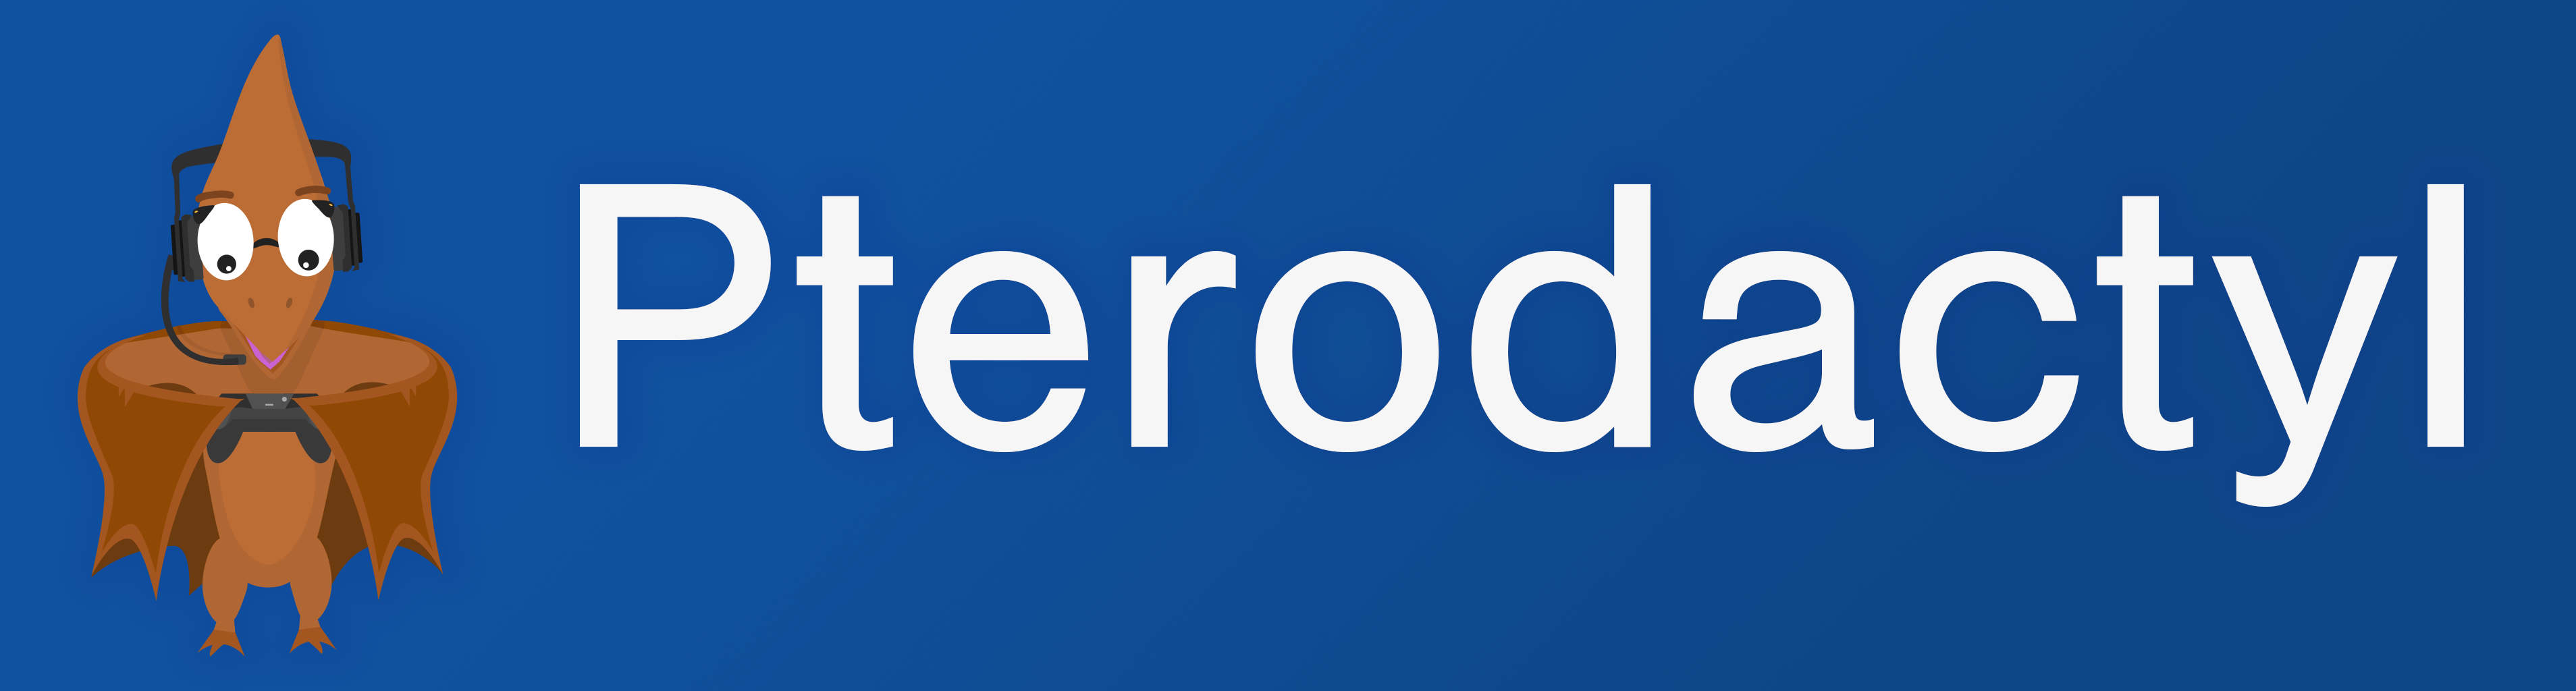 pterodactyl logo